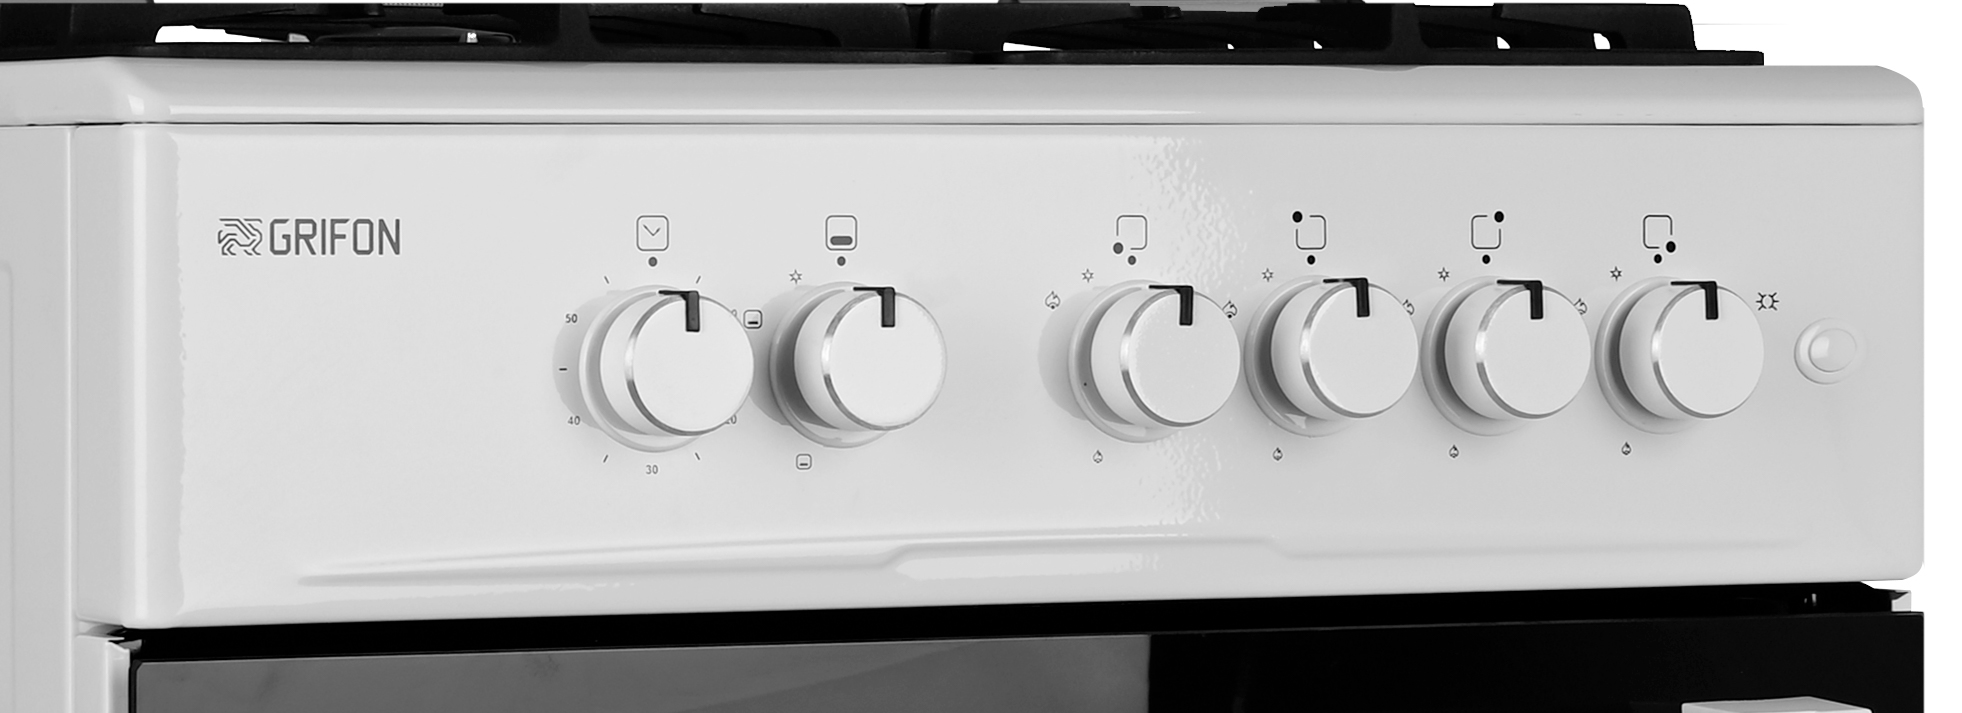 Кухонная плита Grifon G643W-CAWB3 характеристики - фотография 7